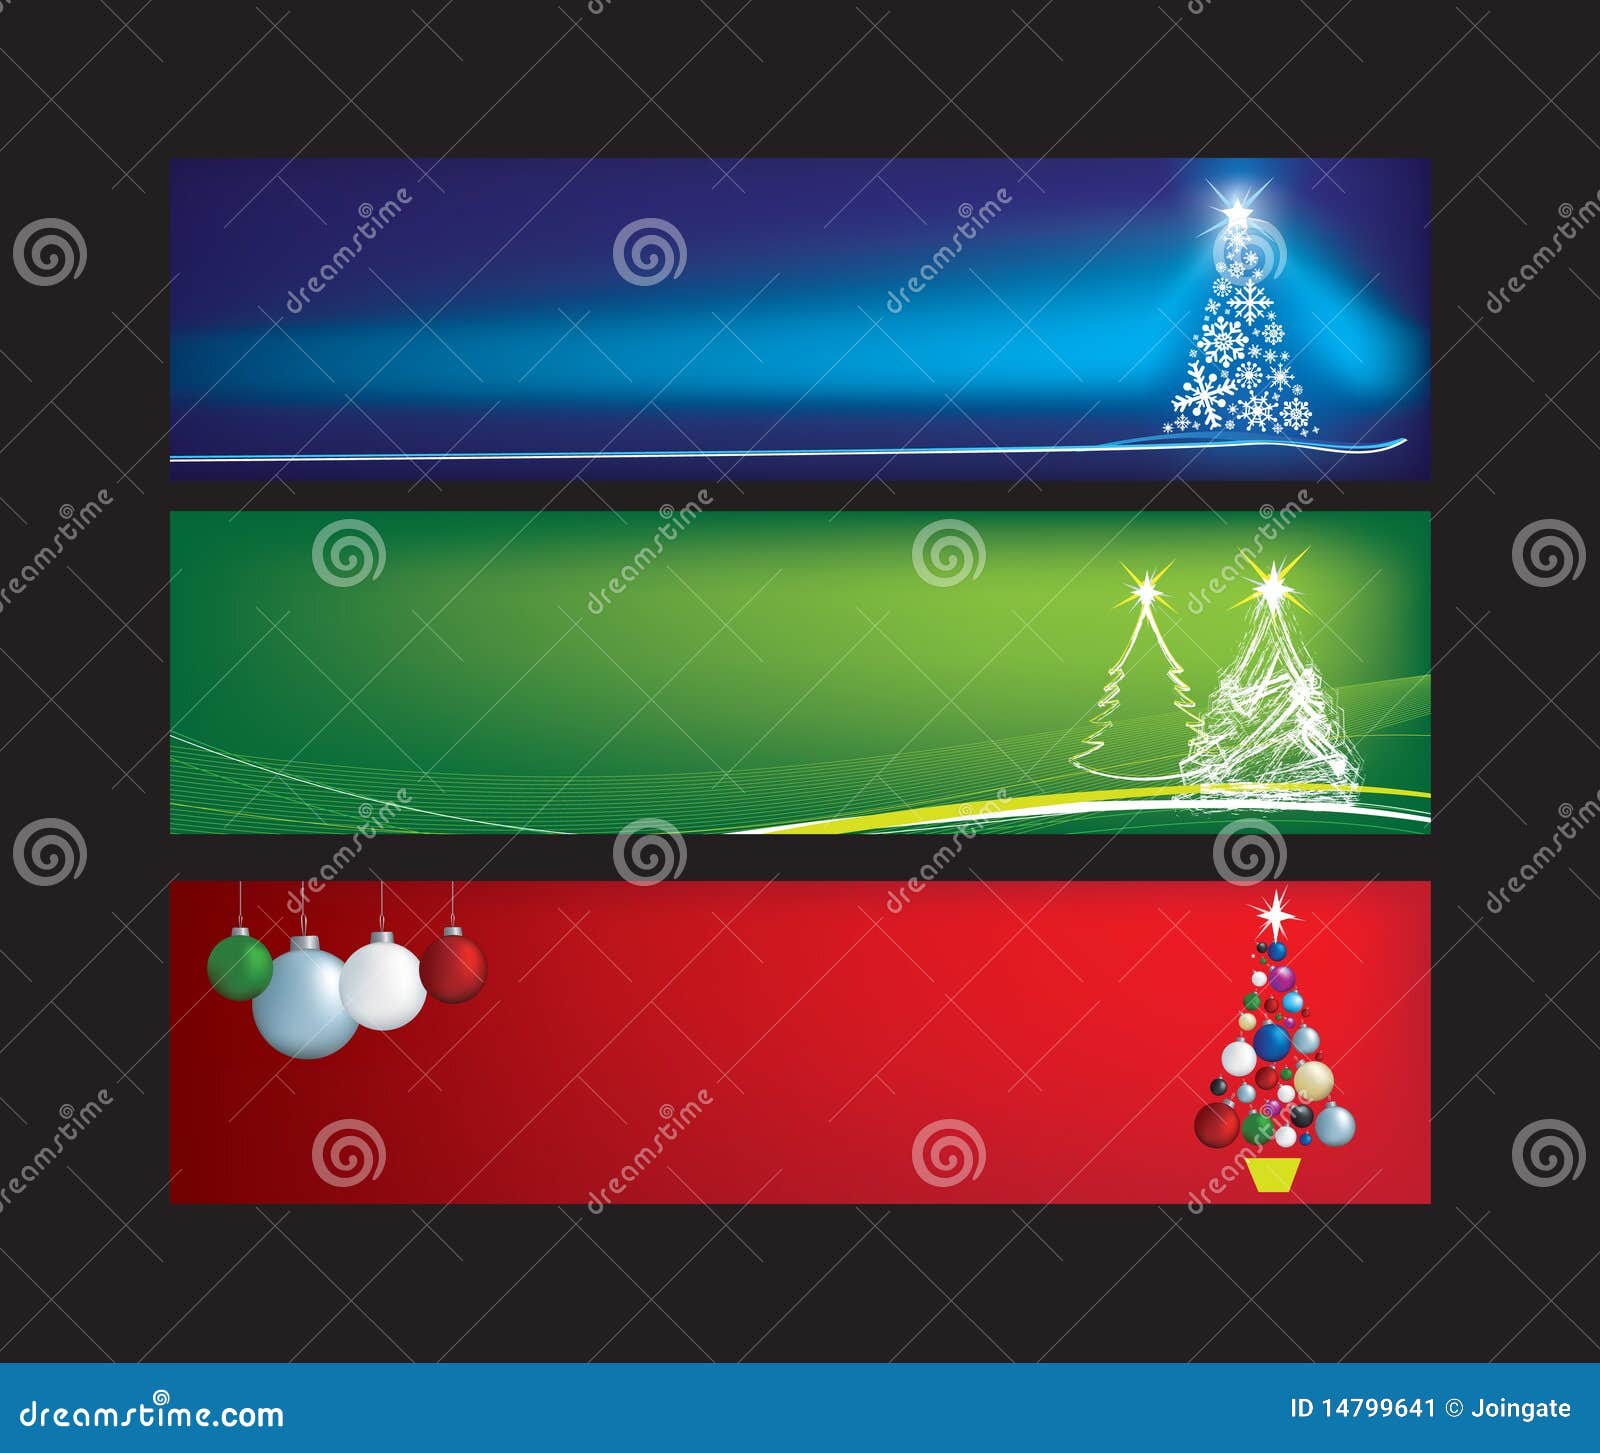 Christmas web banners stock vector. Illustration of star - 14799641